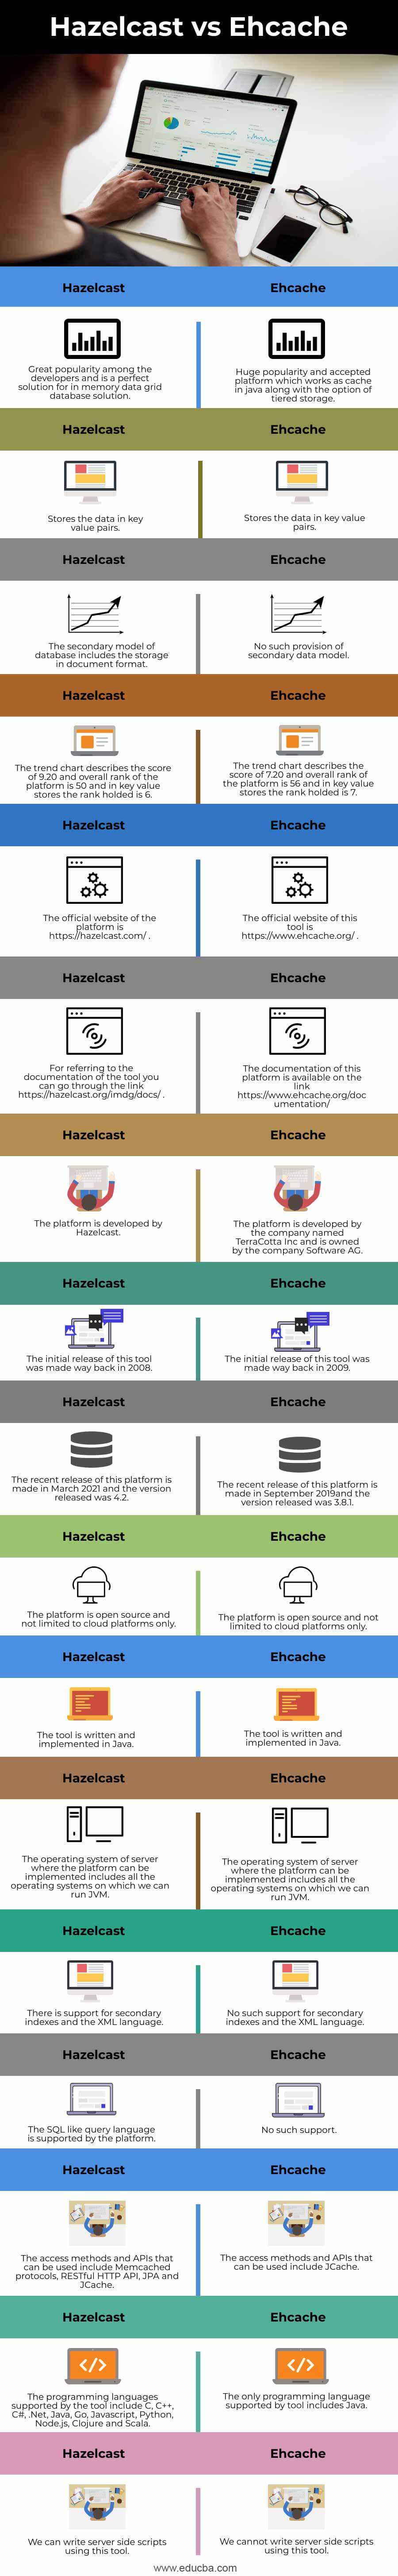 Hazelcast-vs-Ehcache-info